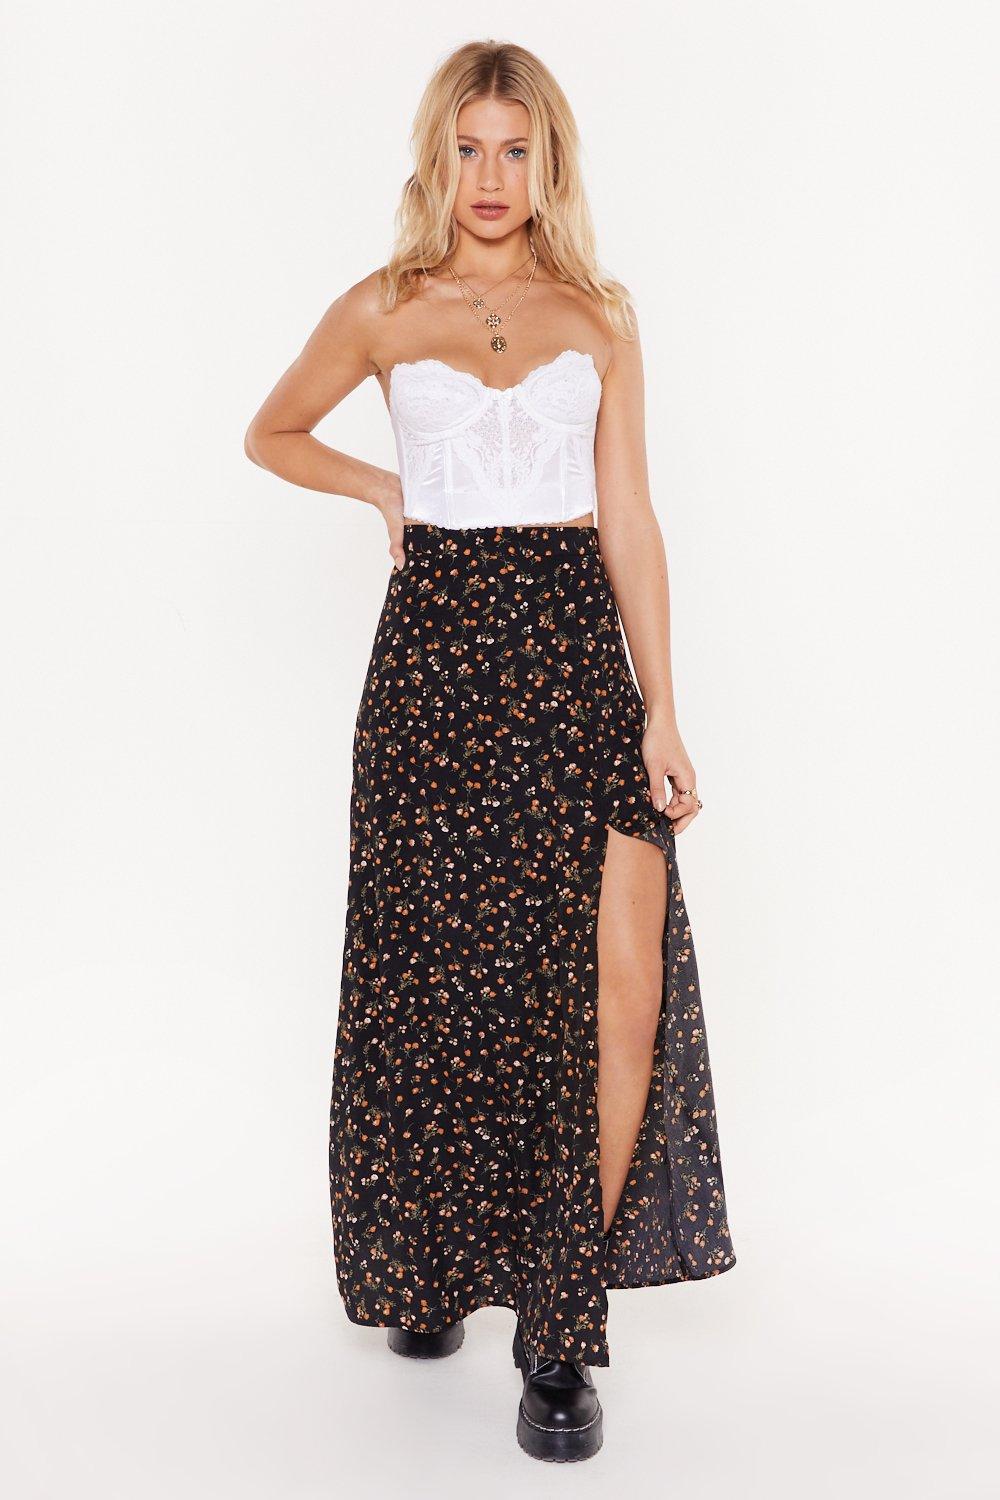 black floral long skirt